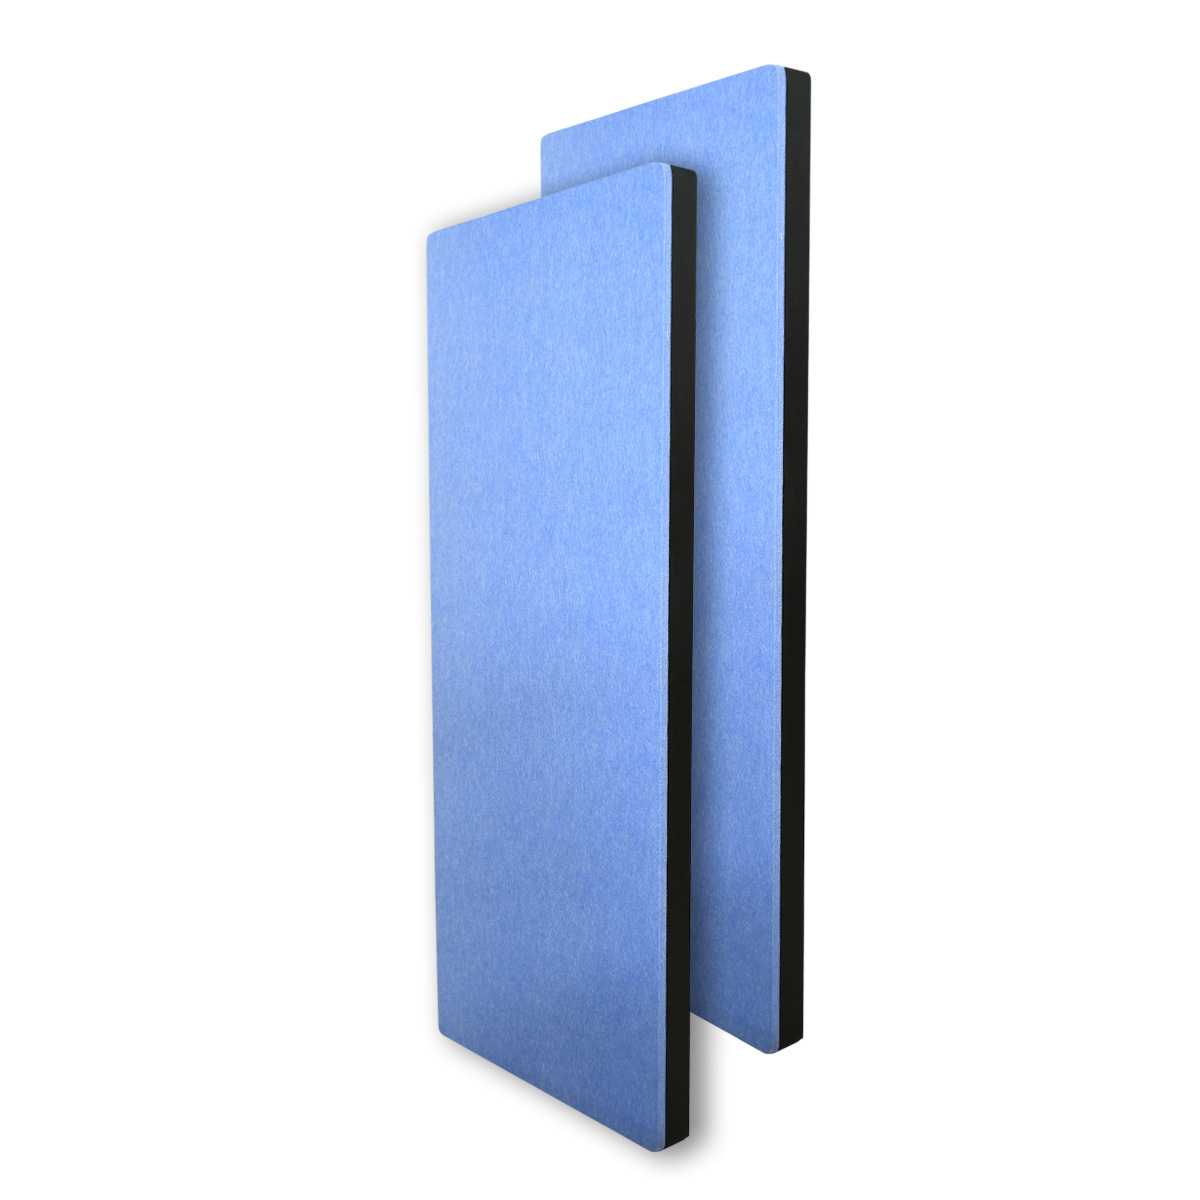 Professional acoustic panel eal3-Lxt2 panel espuma acústica esponja sala cine kit 2 pza 20x20x7cm